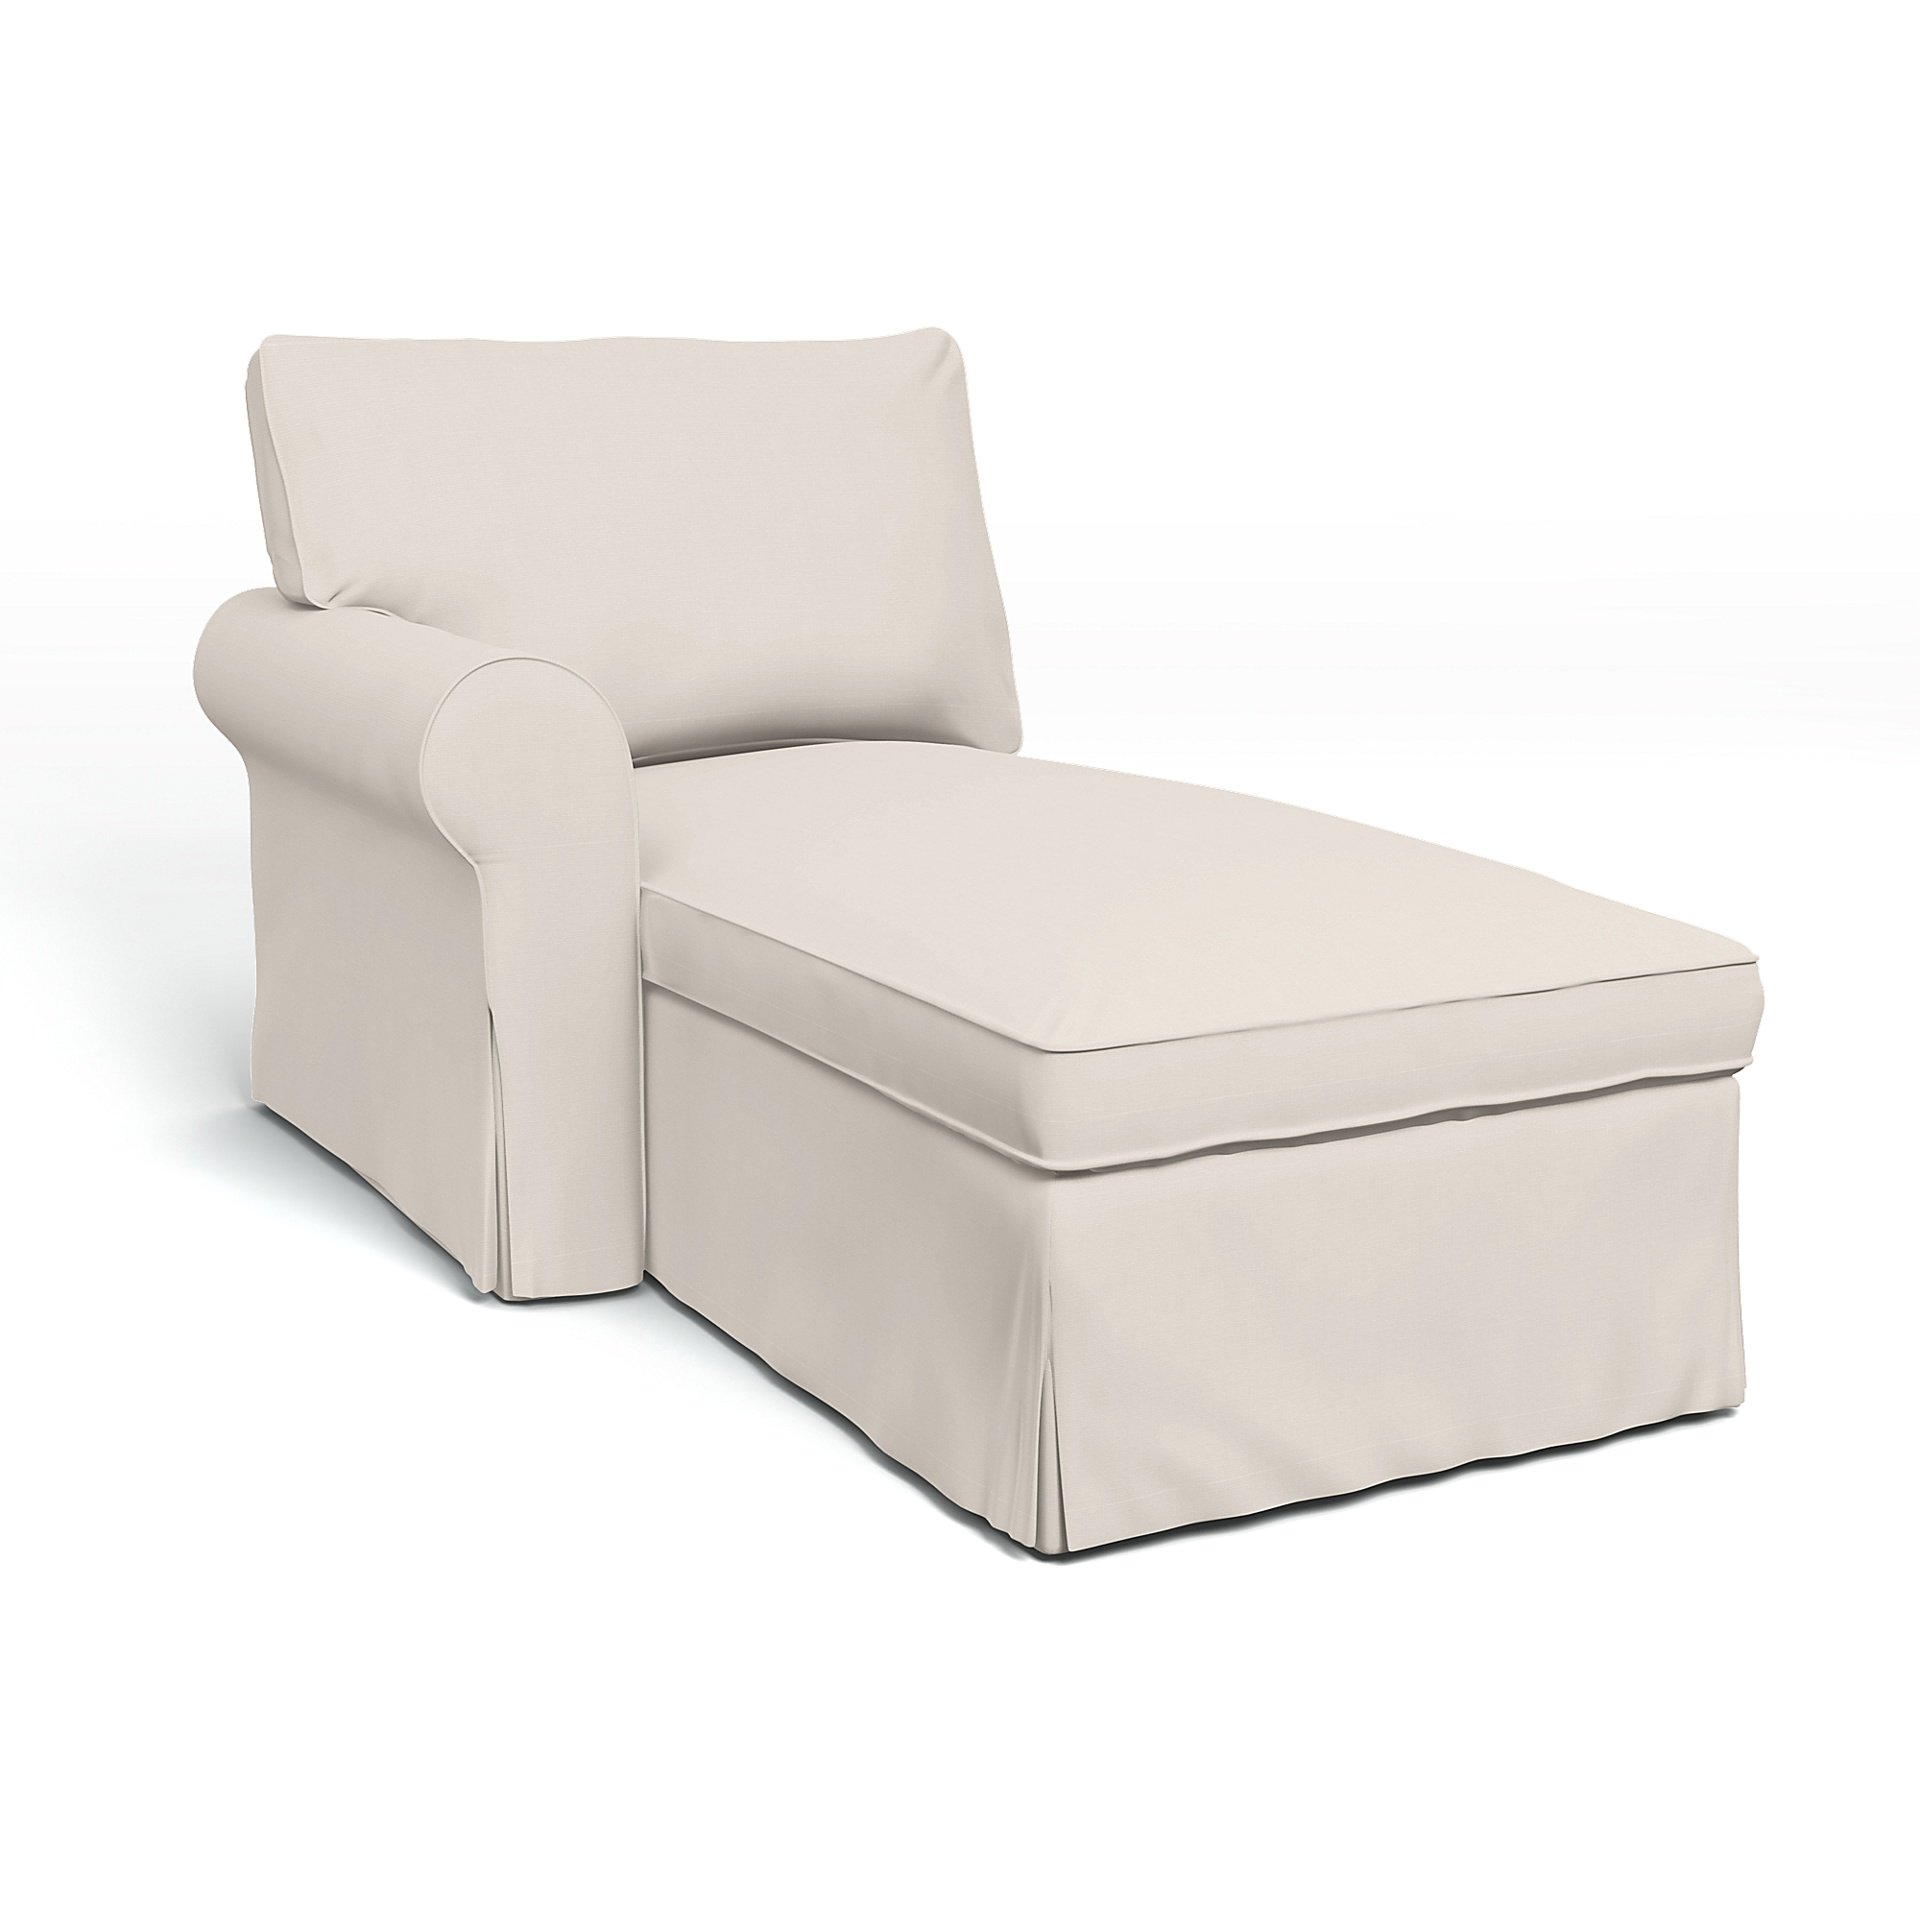 IKEA - Ektorp Chaise with Left Armrest Cover, Soft White, Cotton - Bemz